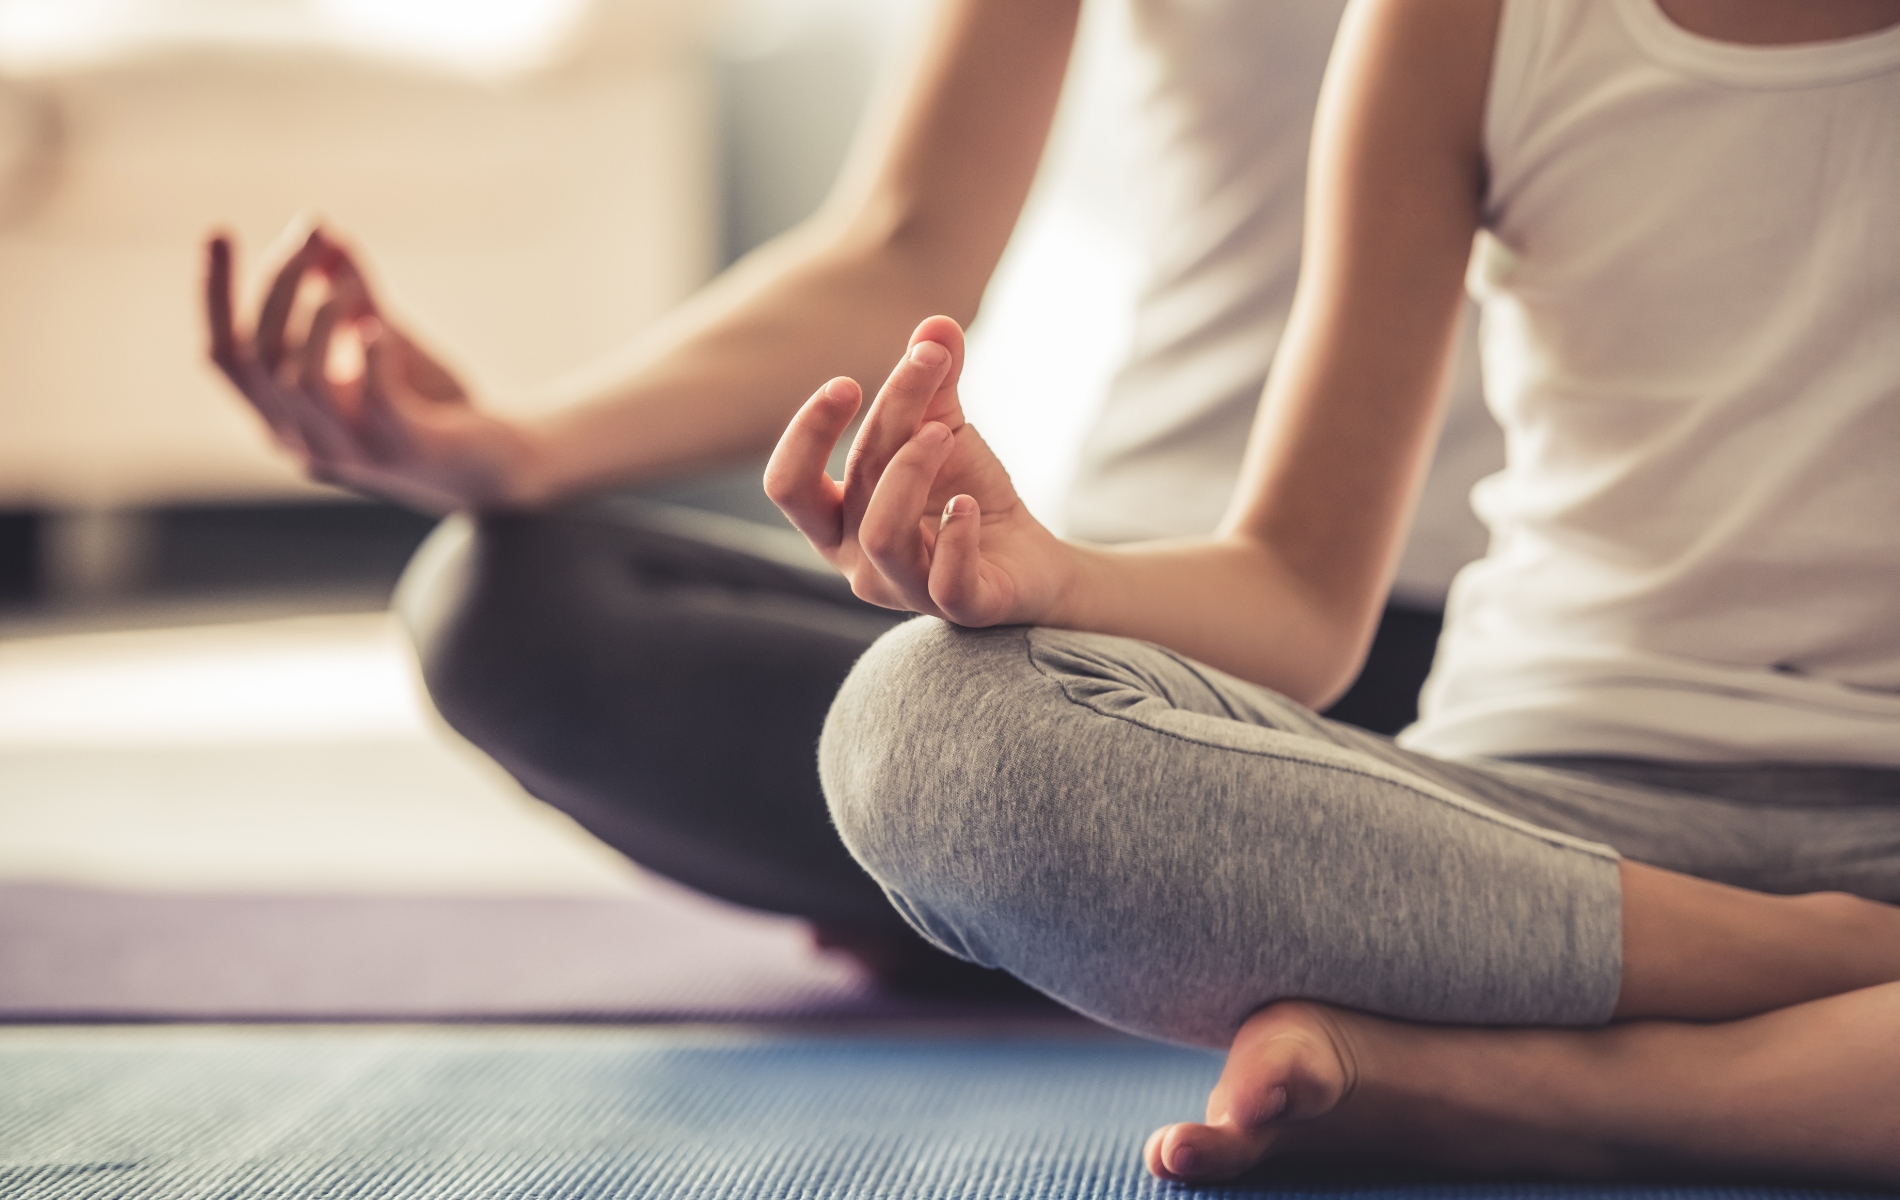 Why we need Yoga & Meditation for wellness?